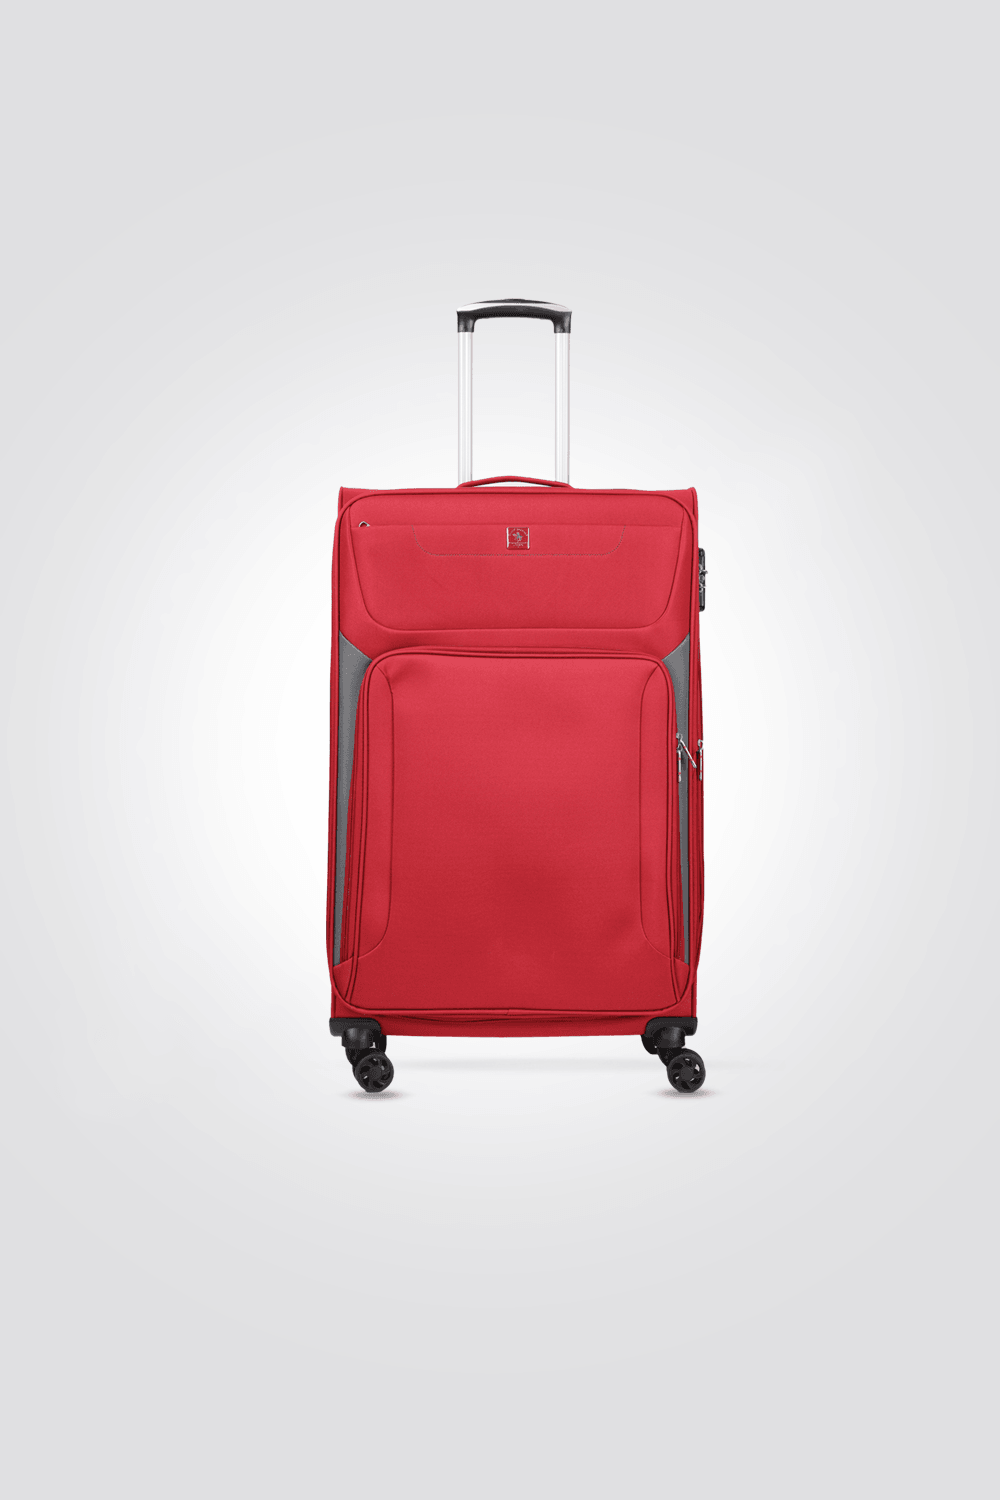 SANTA BARBARA POLO & RAQUET CLUB - סט מזוודות FLORIDA בצבע אדום - MASHBIR//365